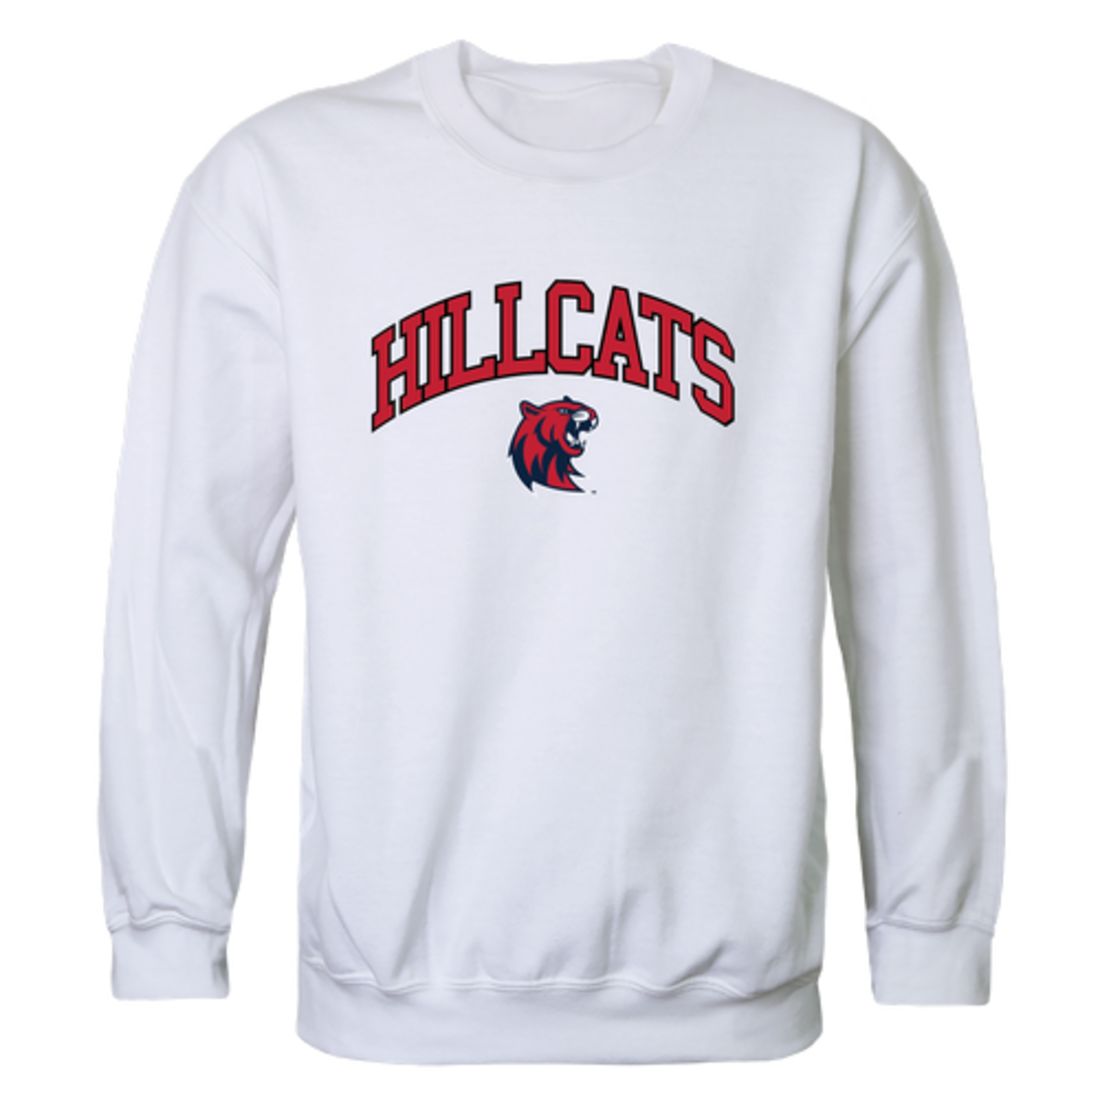 Rogers-State-University-Hillcats-Campus-Fleece-Crewneck-Pullover-Sweatshirt